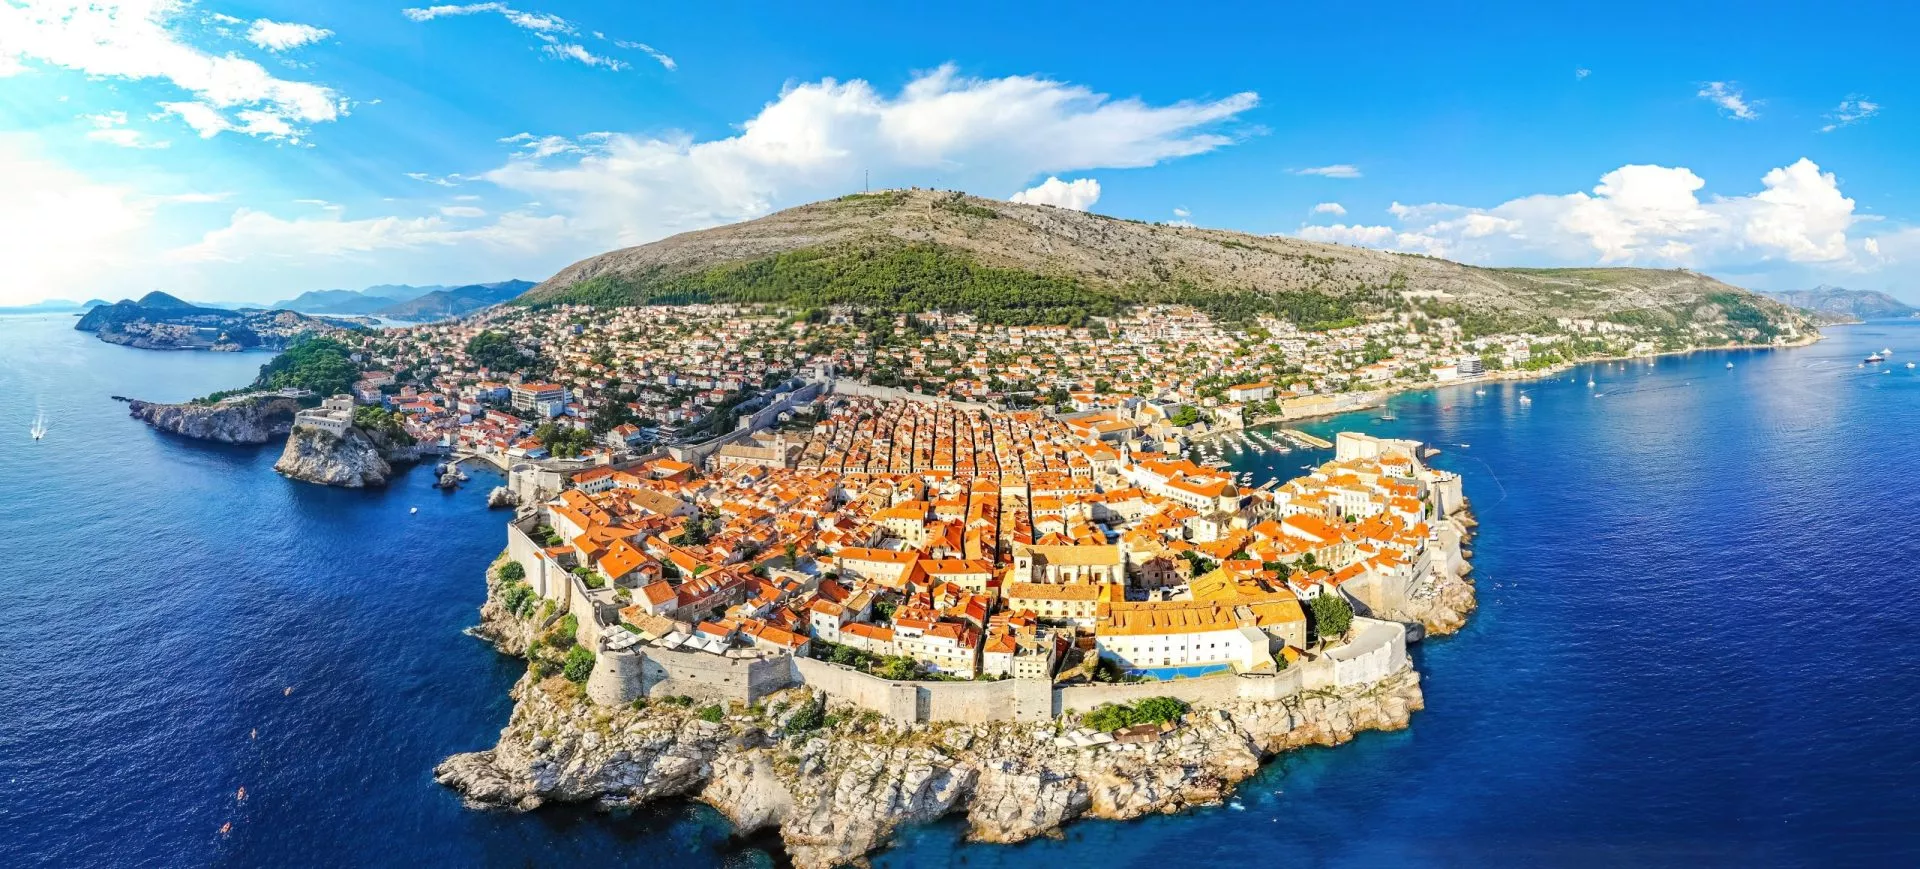 Dubrovnik drone